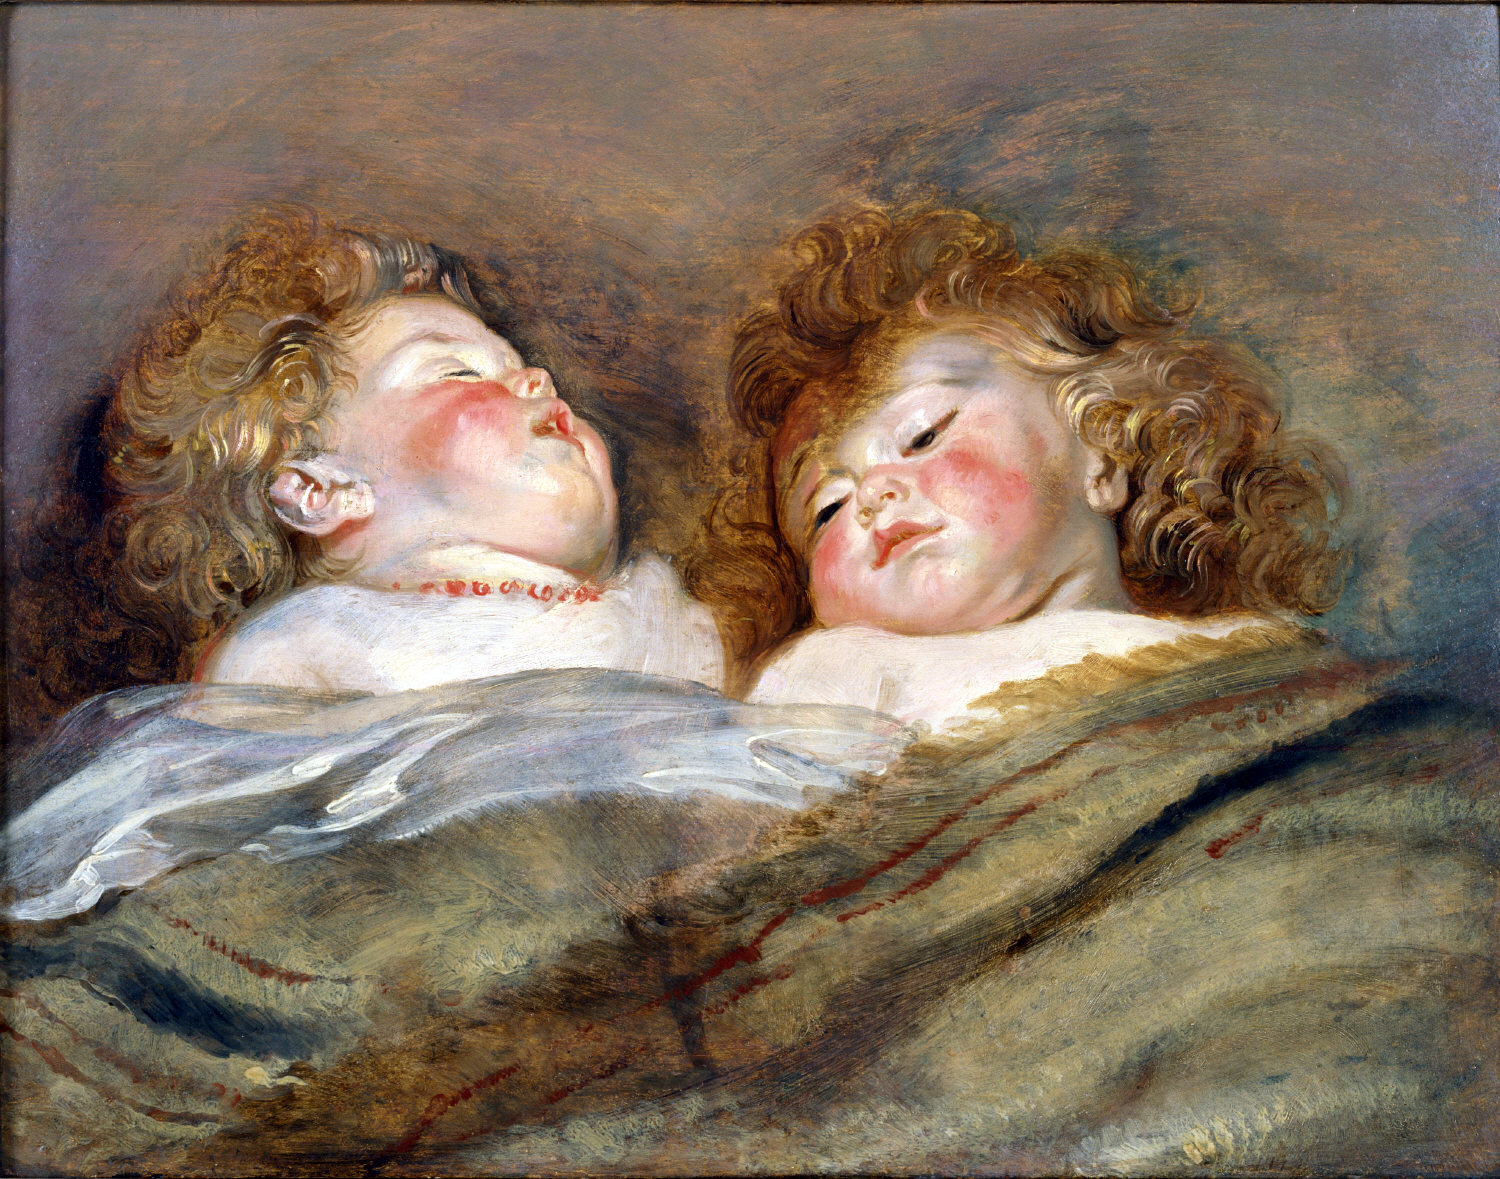 Peter+Paul+Rubens-1577-1640 (122).jpg